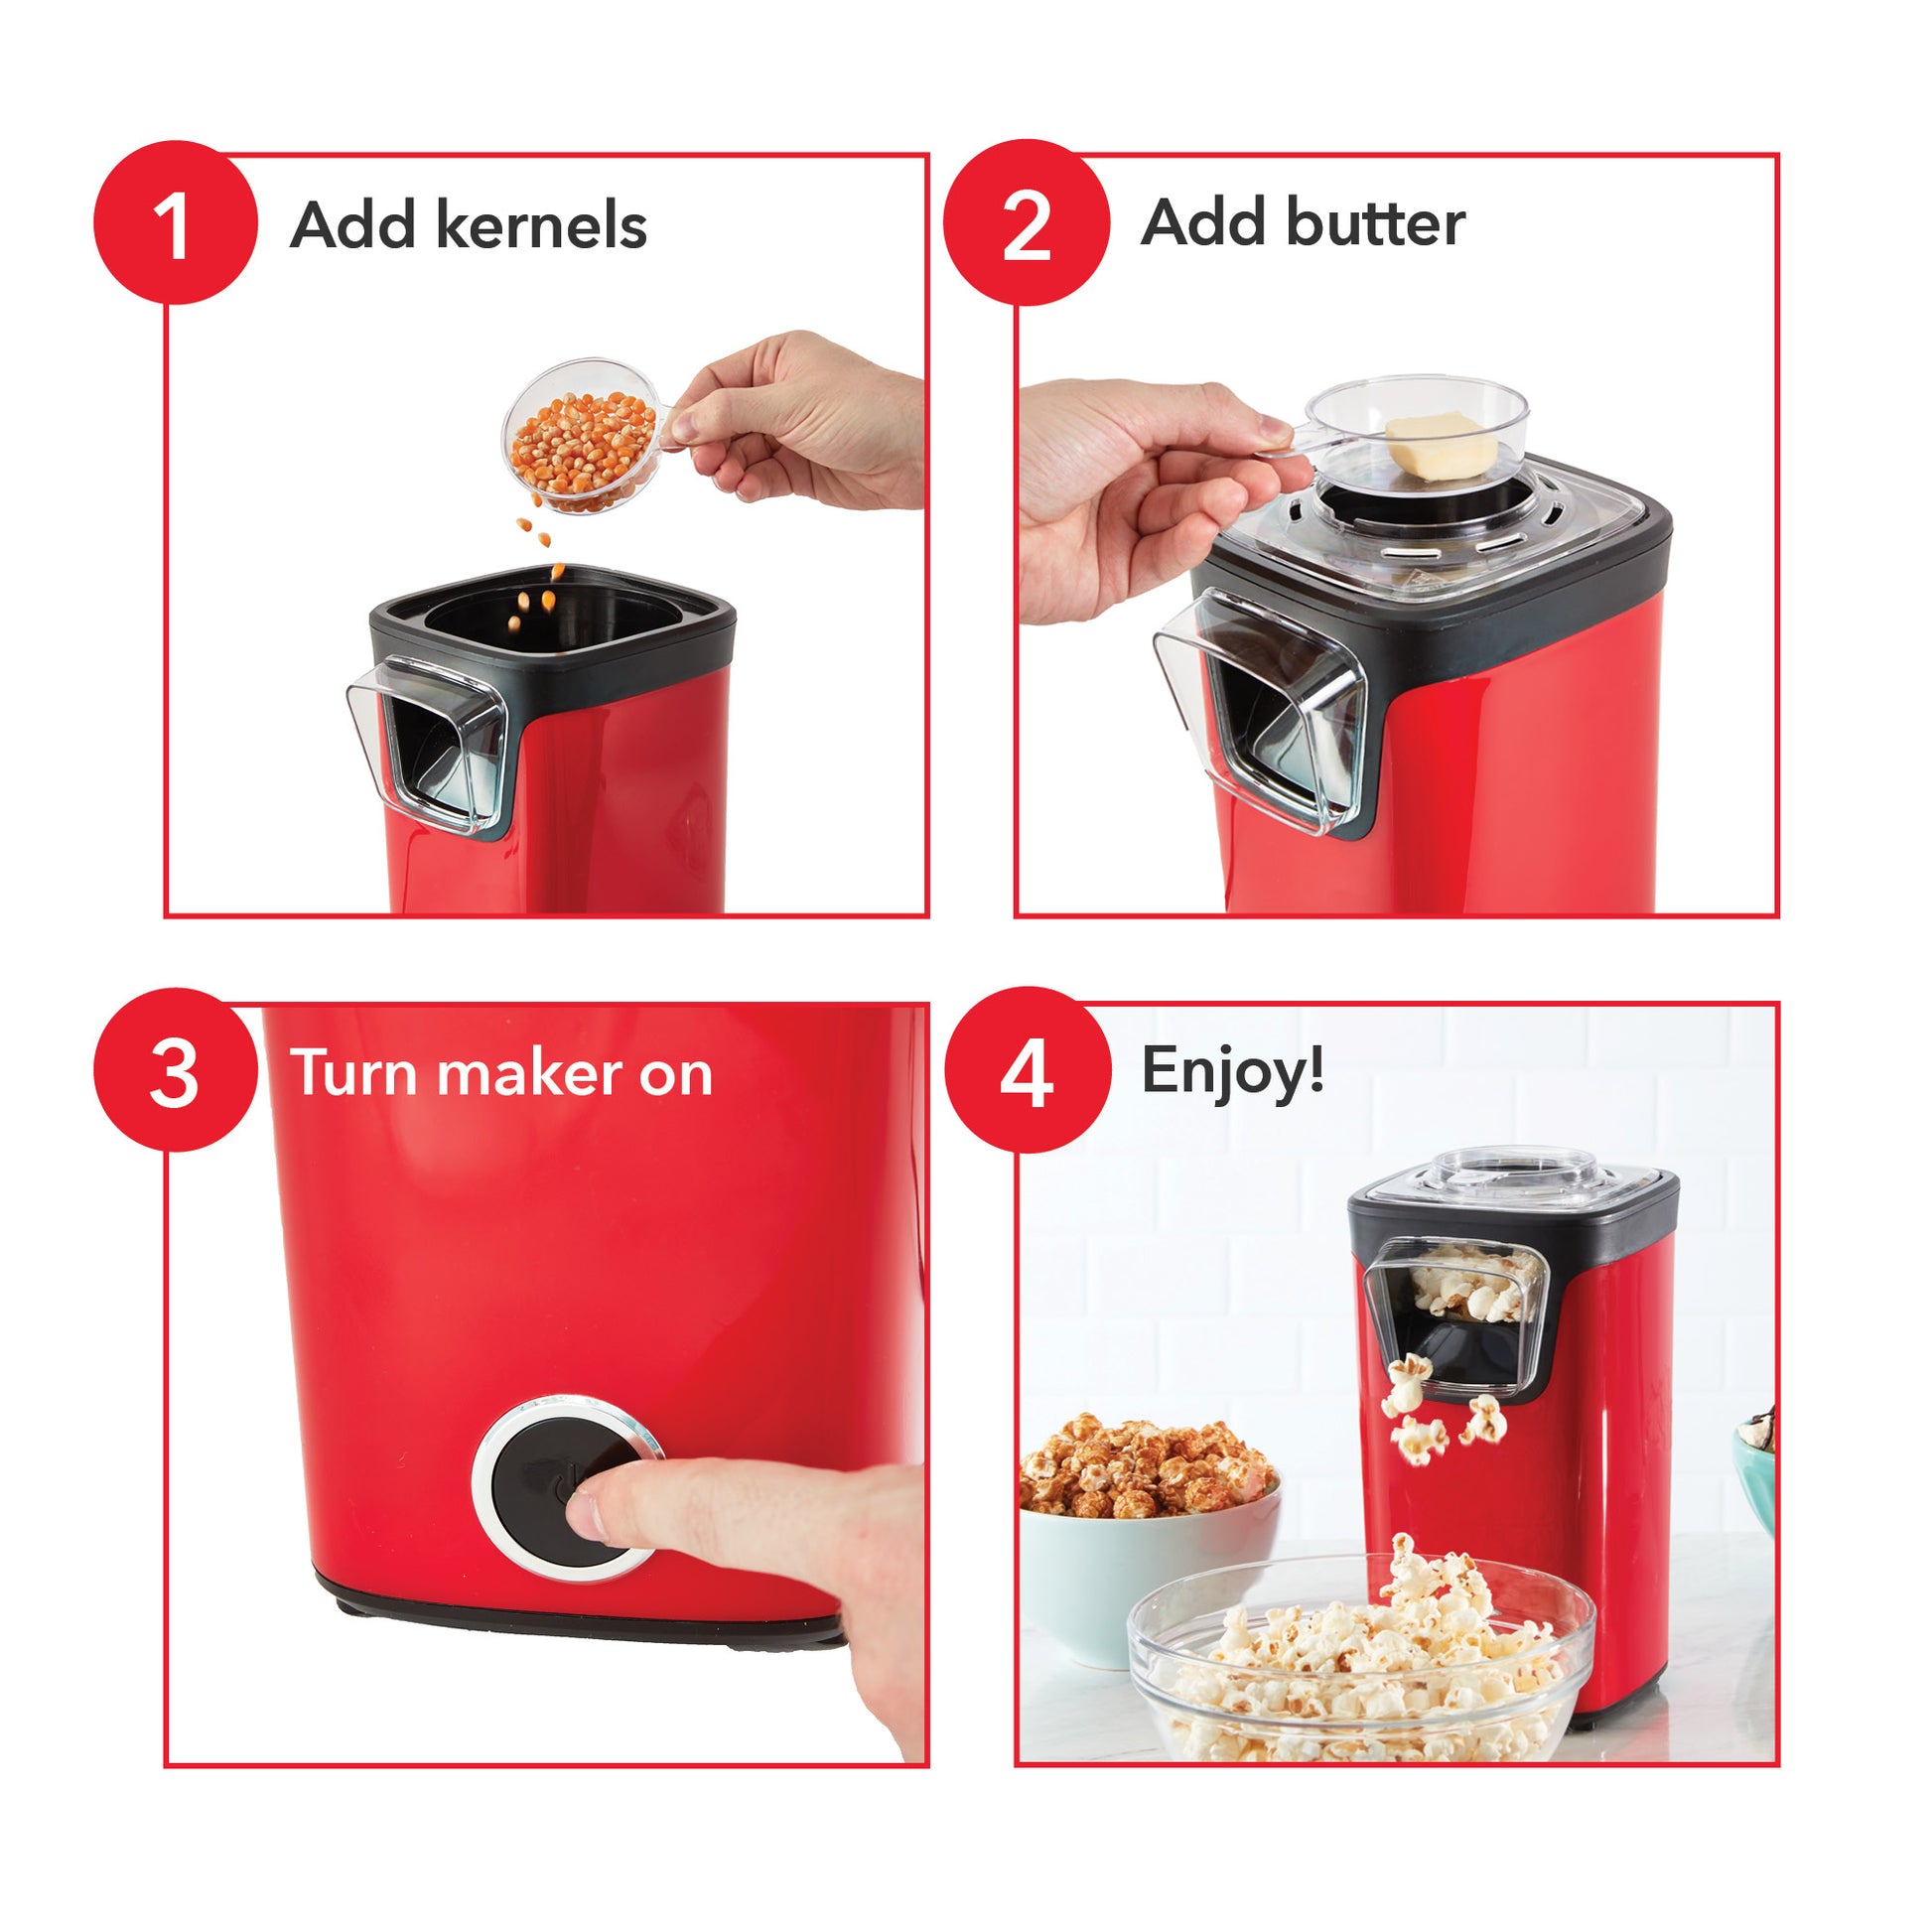 Stovetop Popcorn Popper Red + Reviews